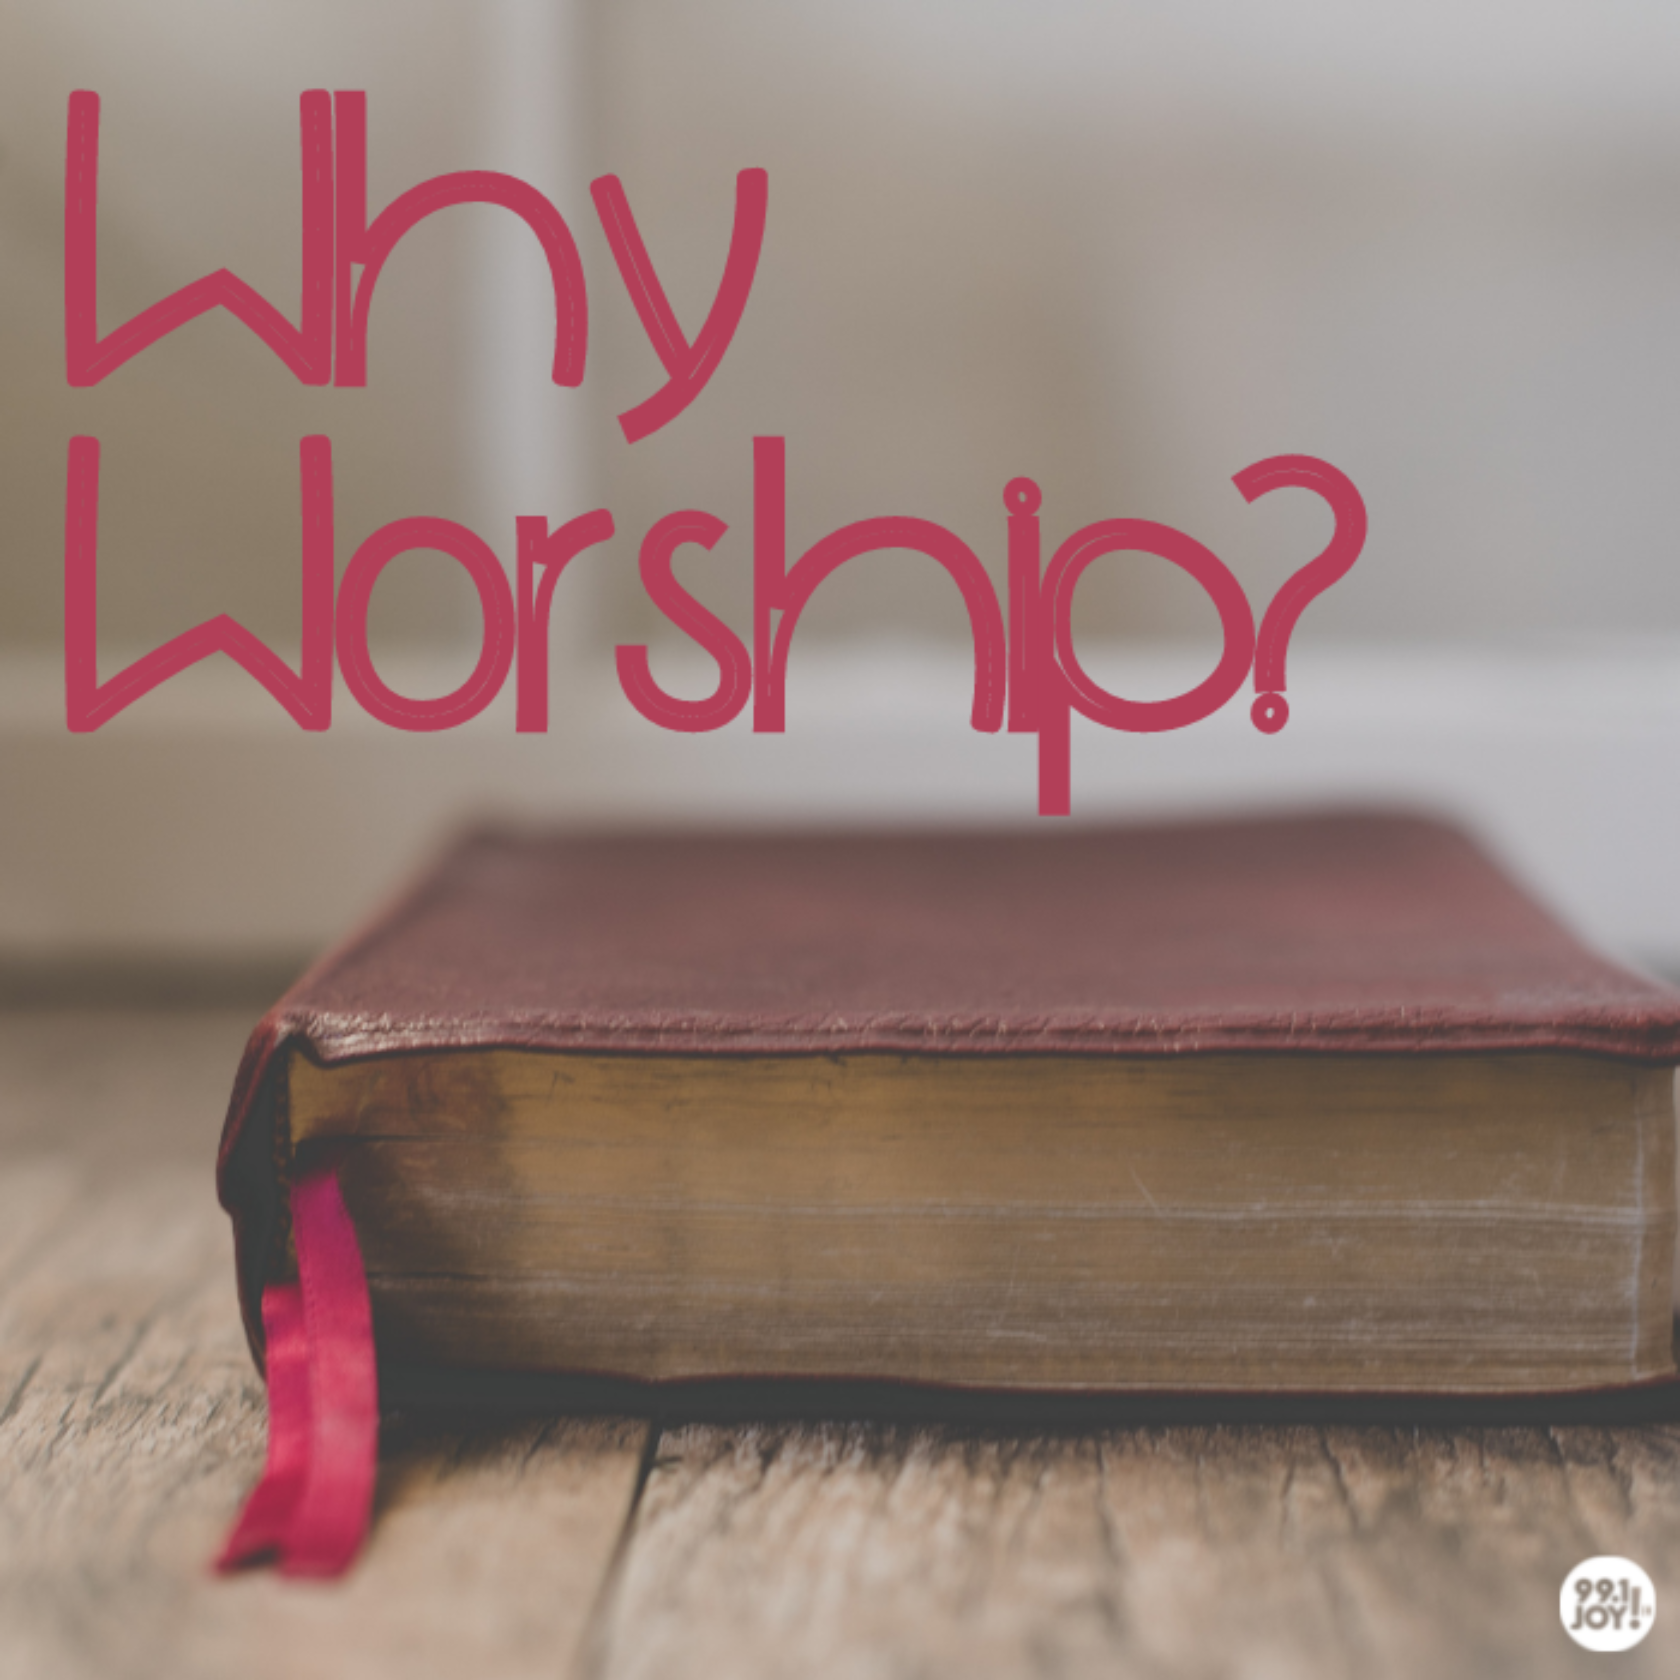 Why Worship?